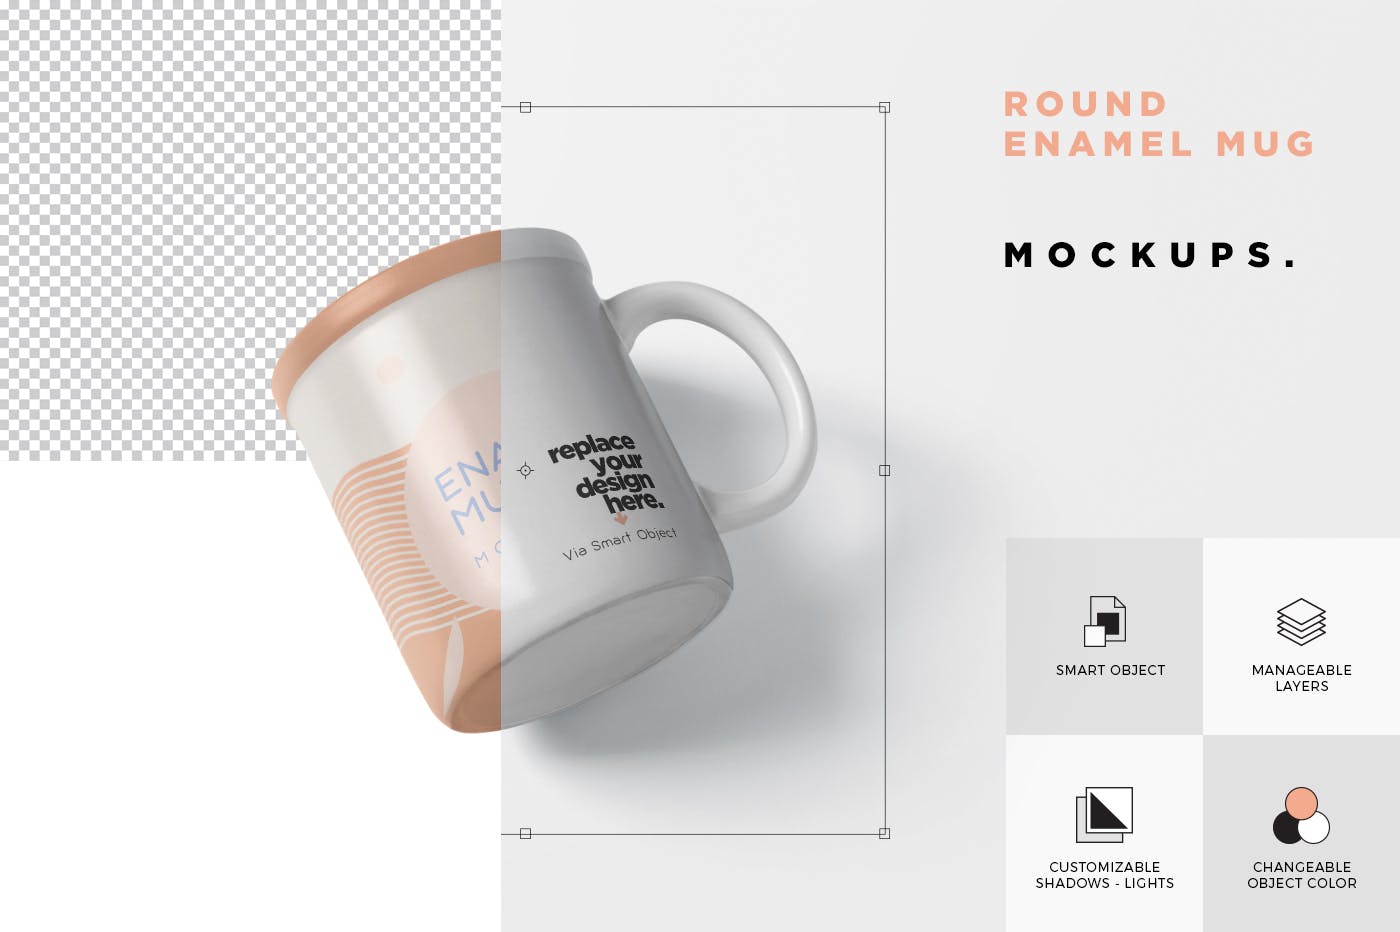 带把手圆形搪瓷杯马克杯图案设计非凡图库精选 Round Enamel Mug Mockup With Handle插图(5)